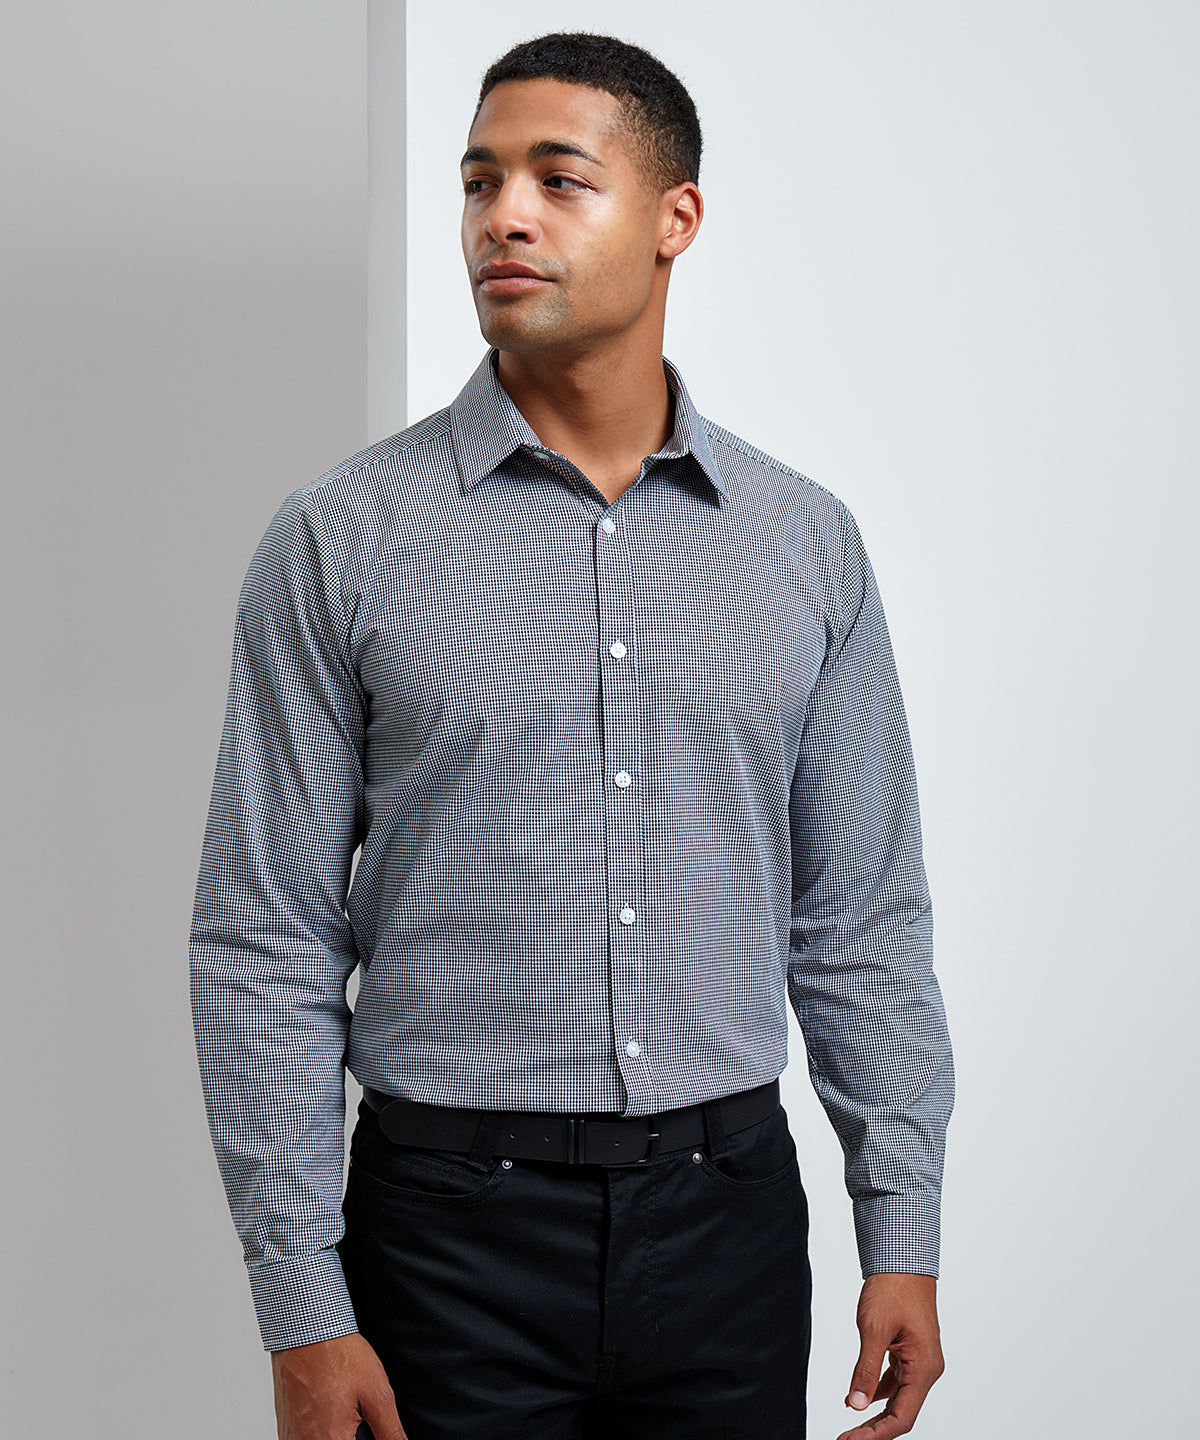 Bolir - Microcheck (Gingham) Long Sleeve Cotton Shirt